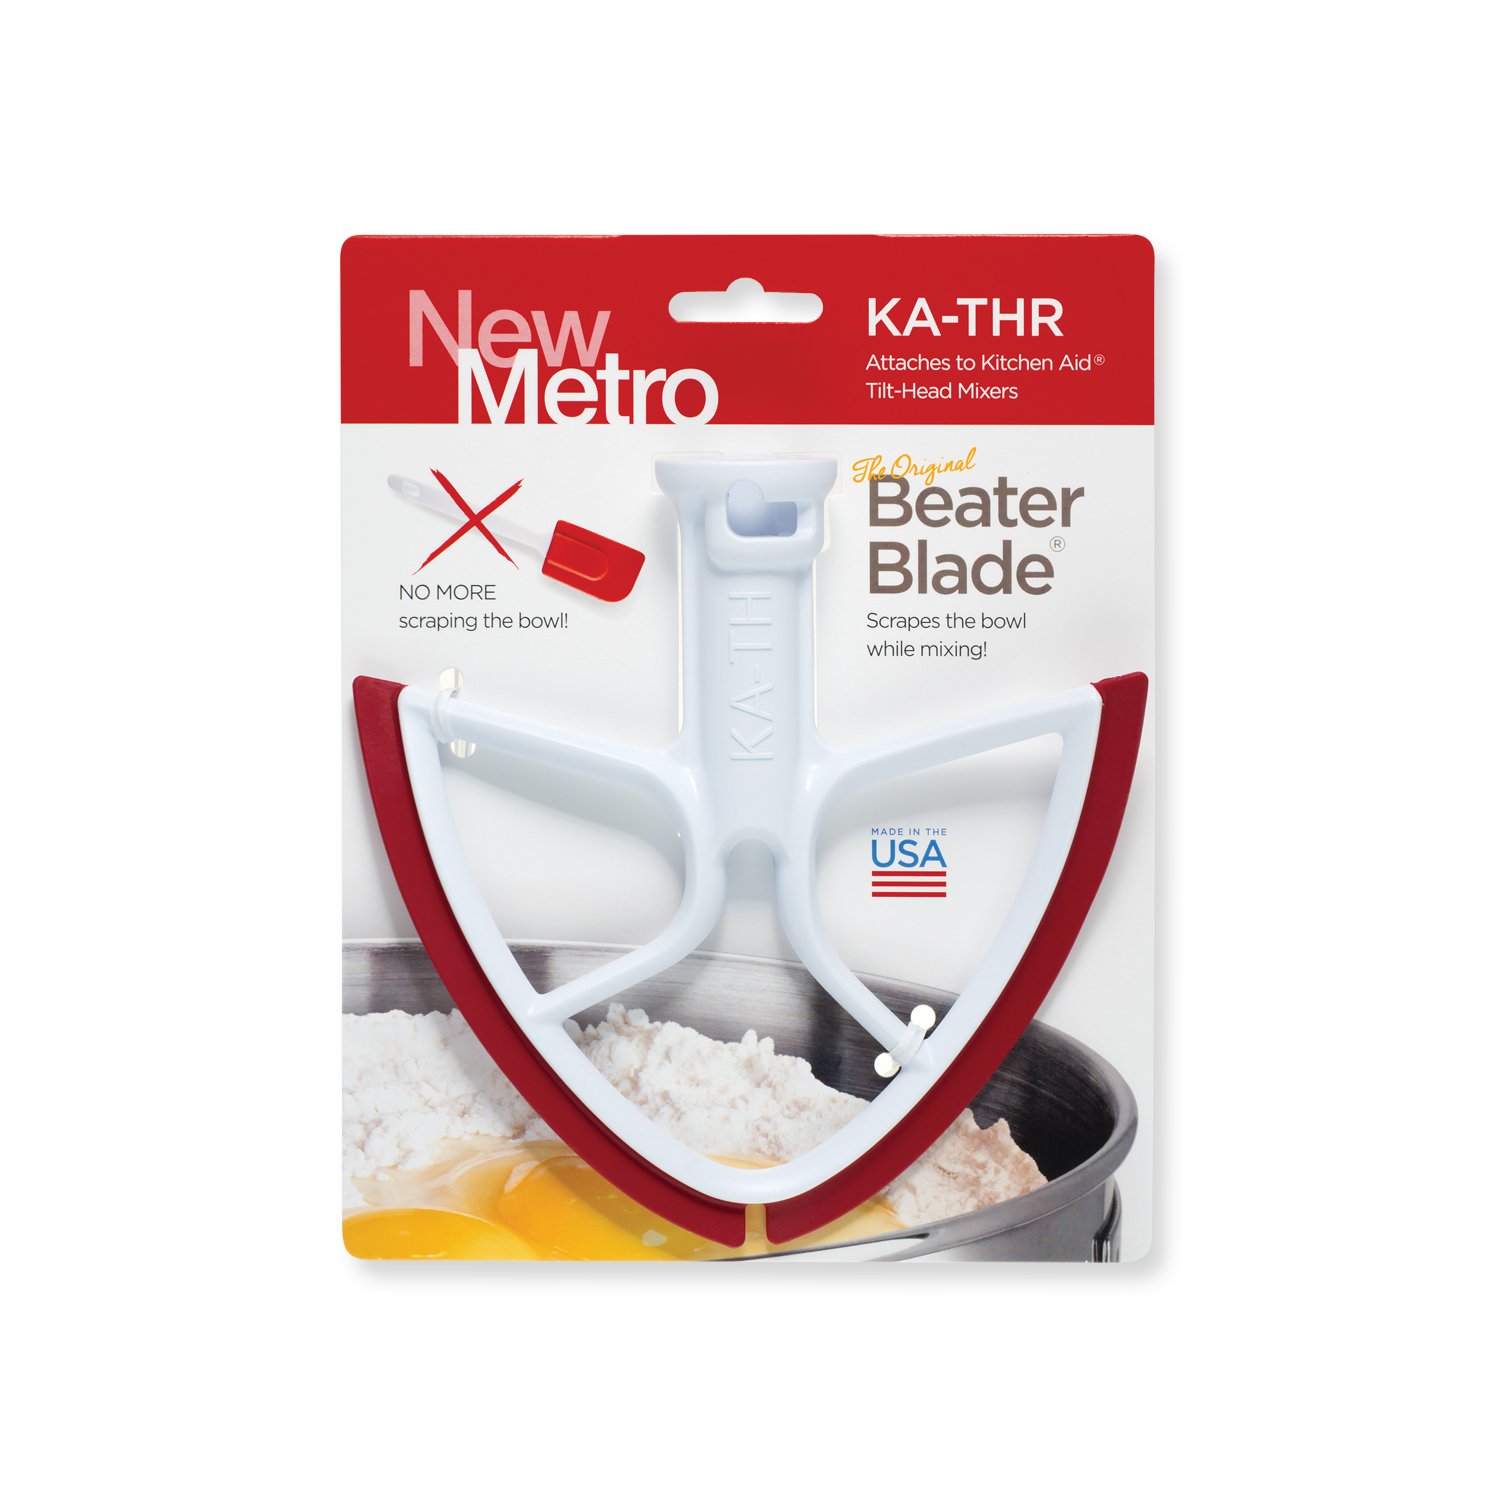 Plastic KA-TH BeaterBlade / Fits Tilt-Head 4.5 & 5 QT Mixers